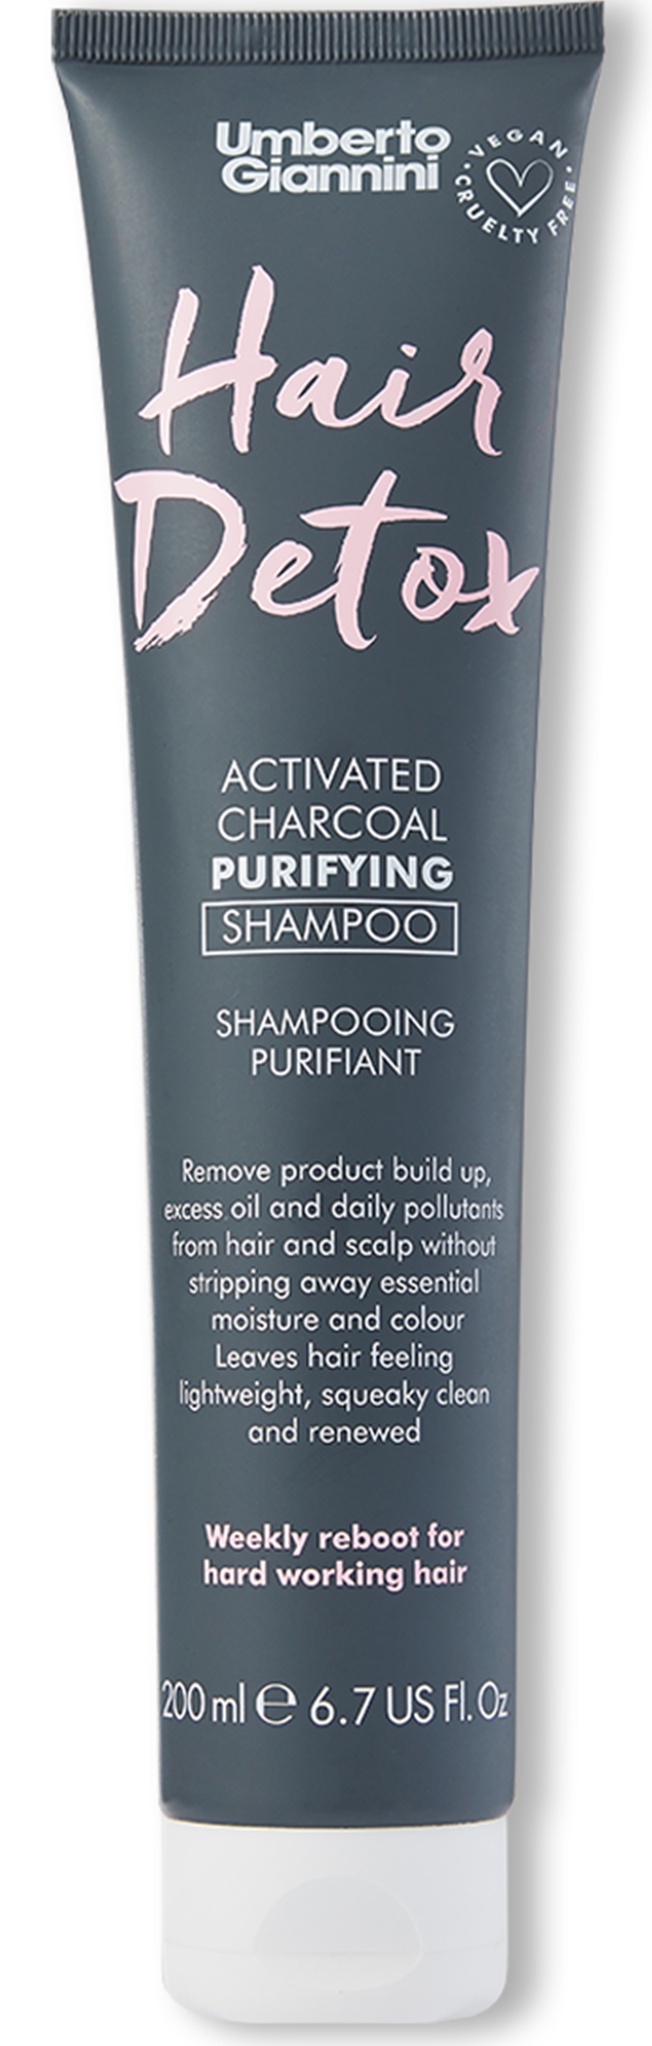 Umberto Giannini Hair Detox Activated Charcoal Purifying Shampoo